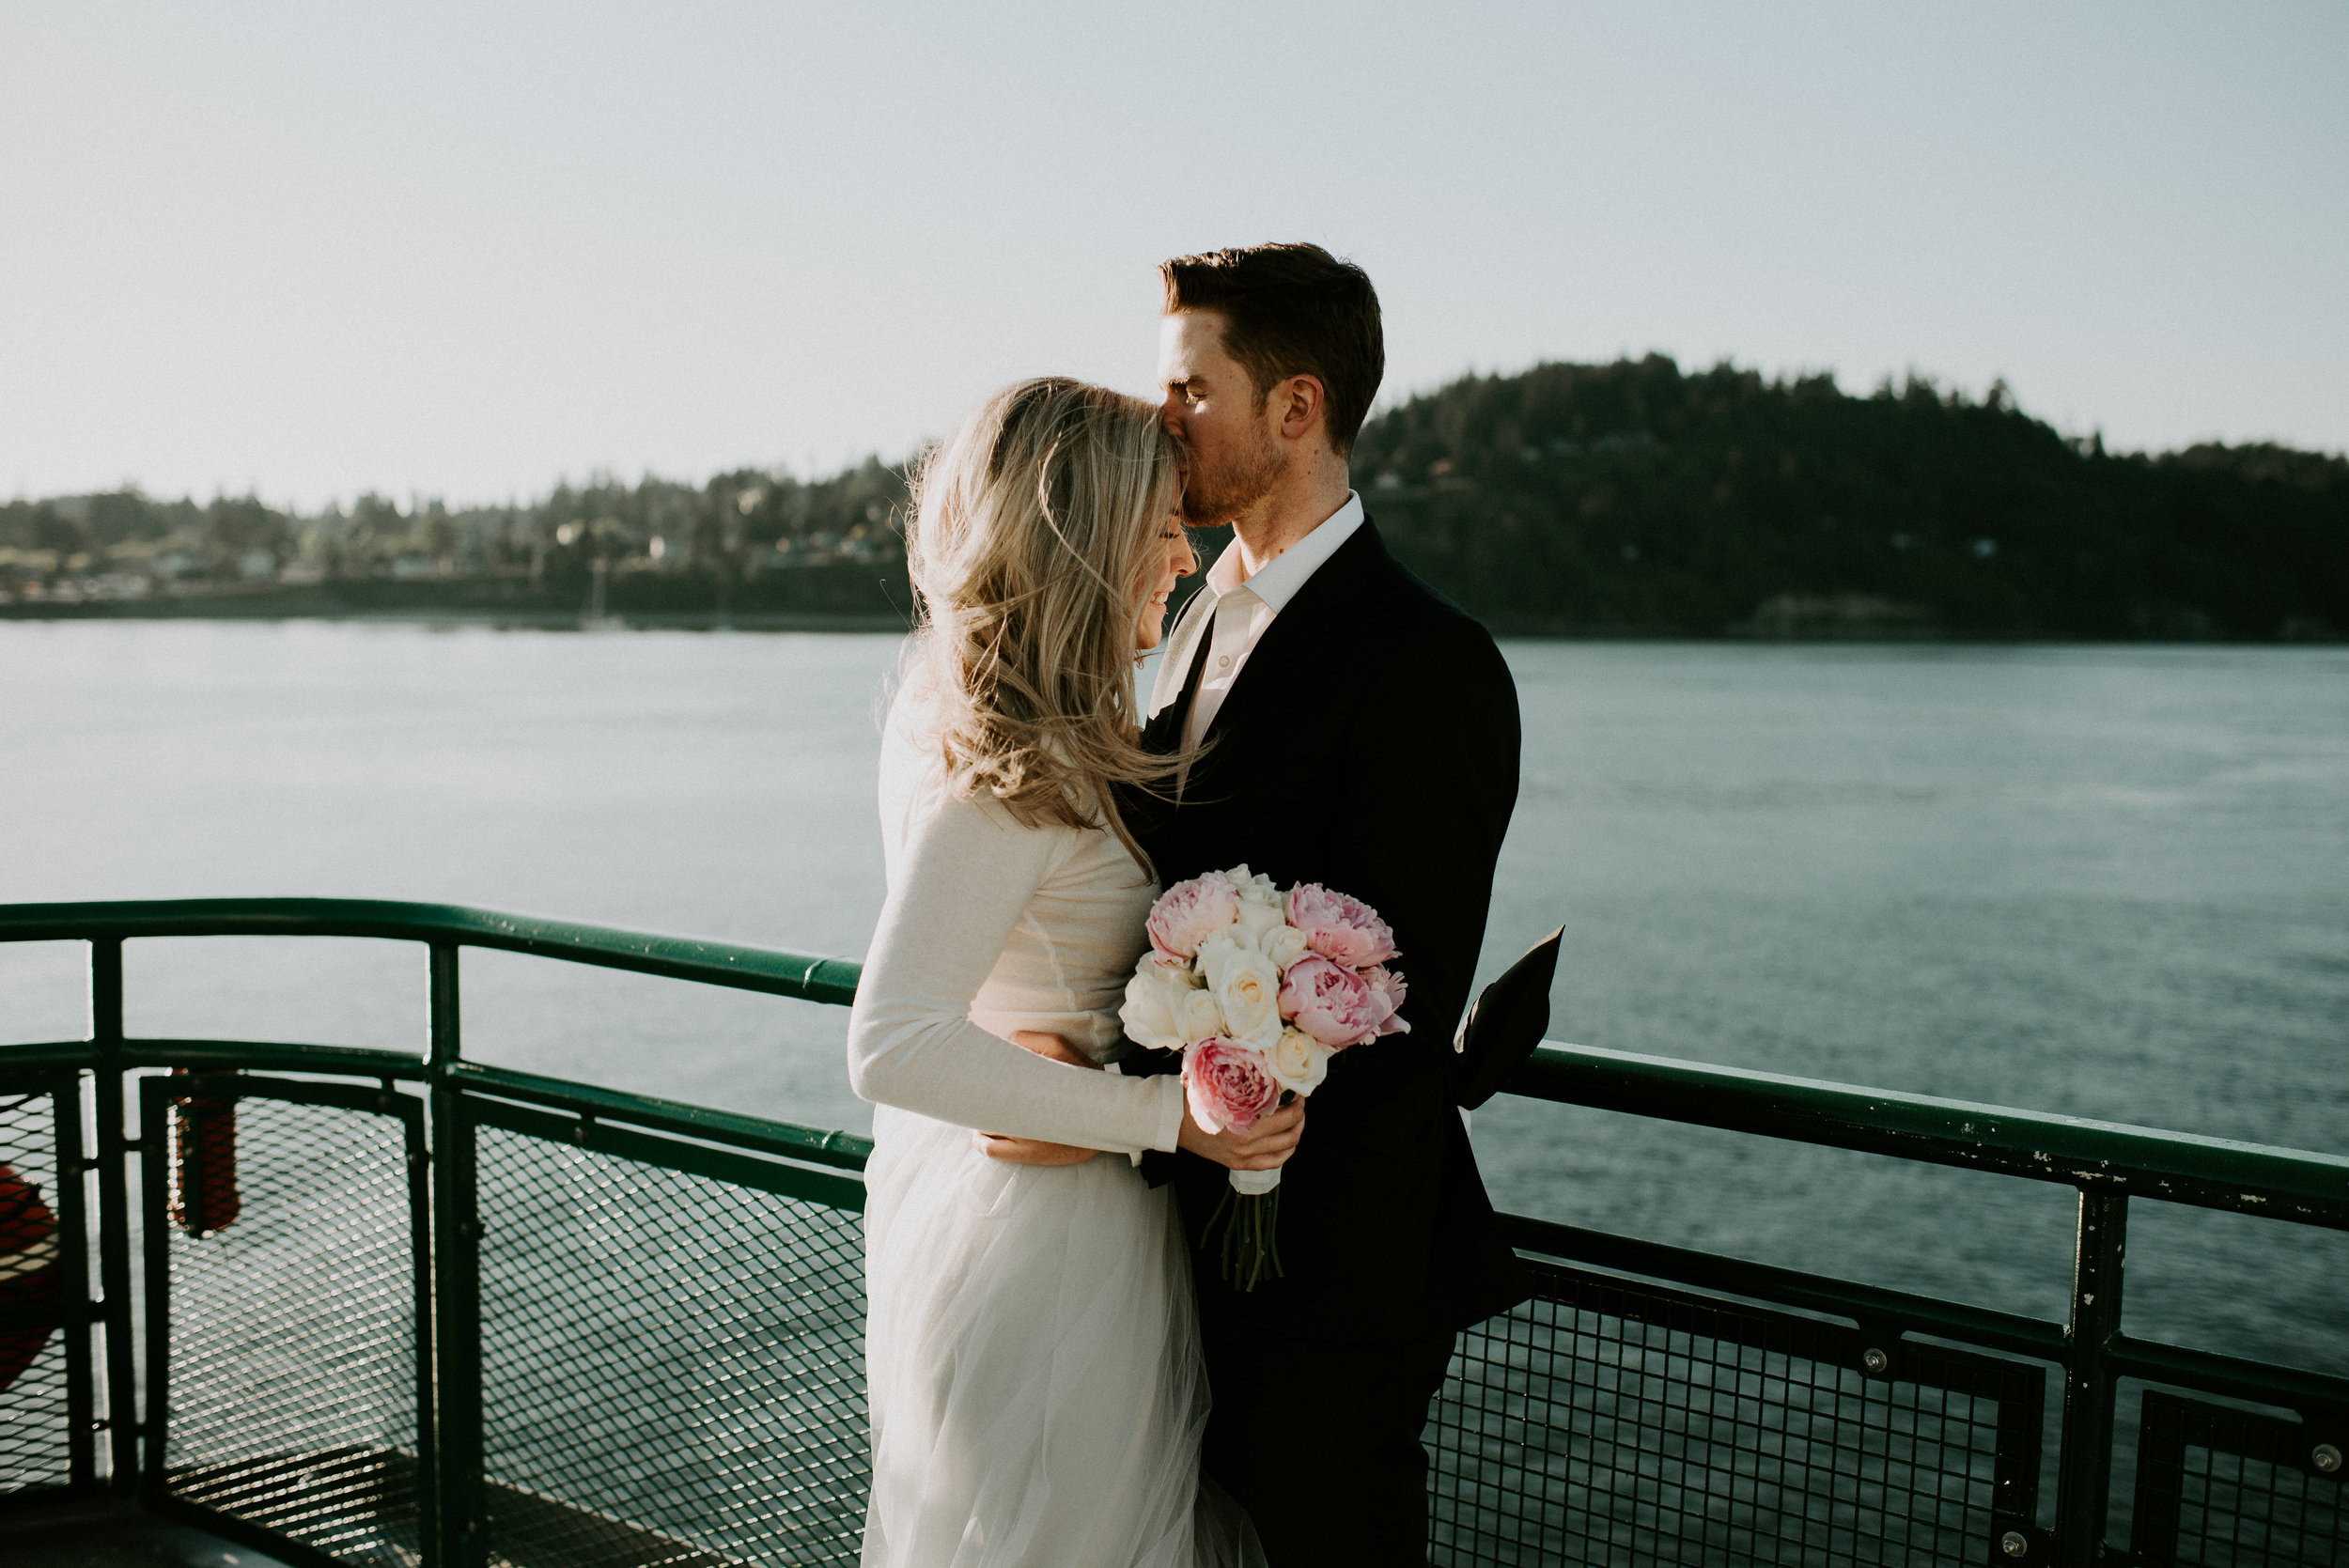 Hannah + Calvin Engagement Session - Kamra Fuller Photography - Edmonds, WA Ferry to Kingston, WA - Seattle Wedding Photographer 